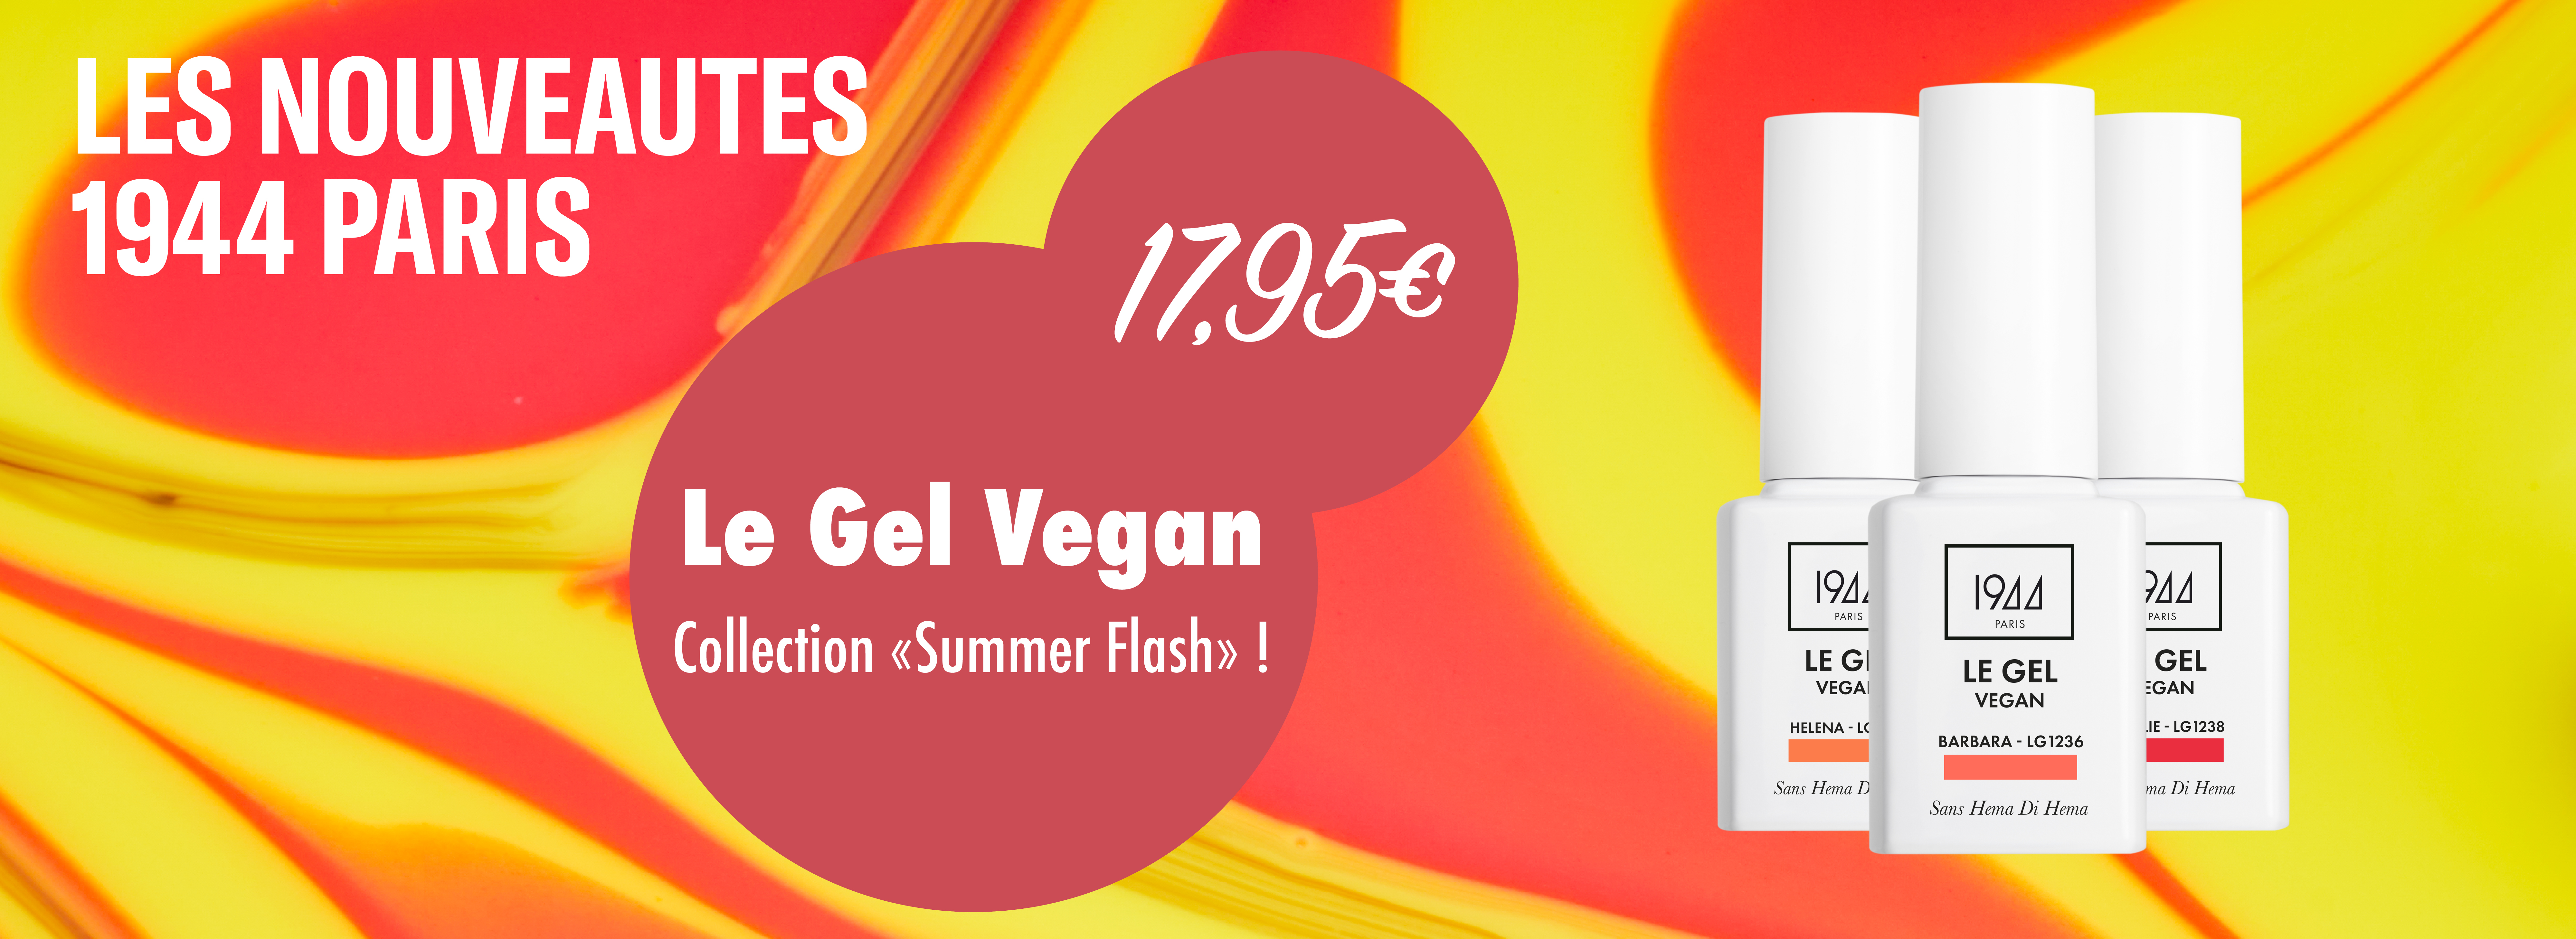 Collection Summer Flash - Gel Vegan 1944 Paris - Ad Beauty